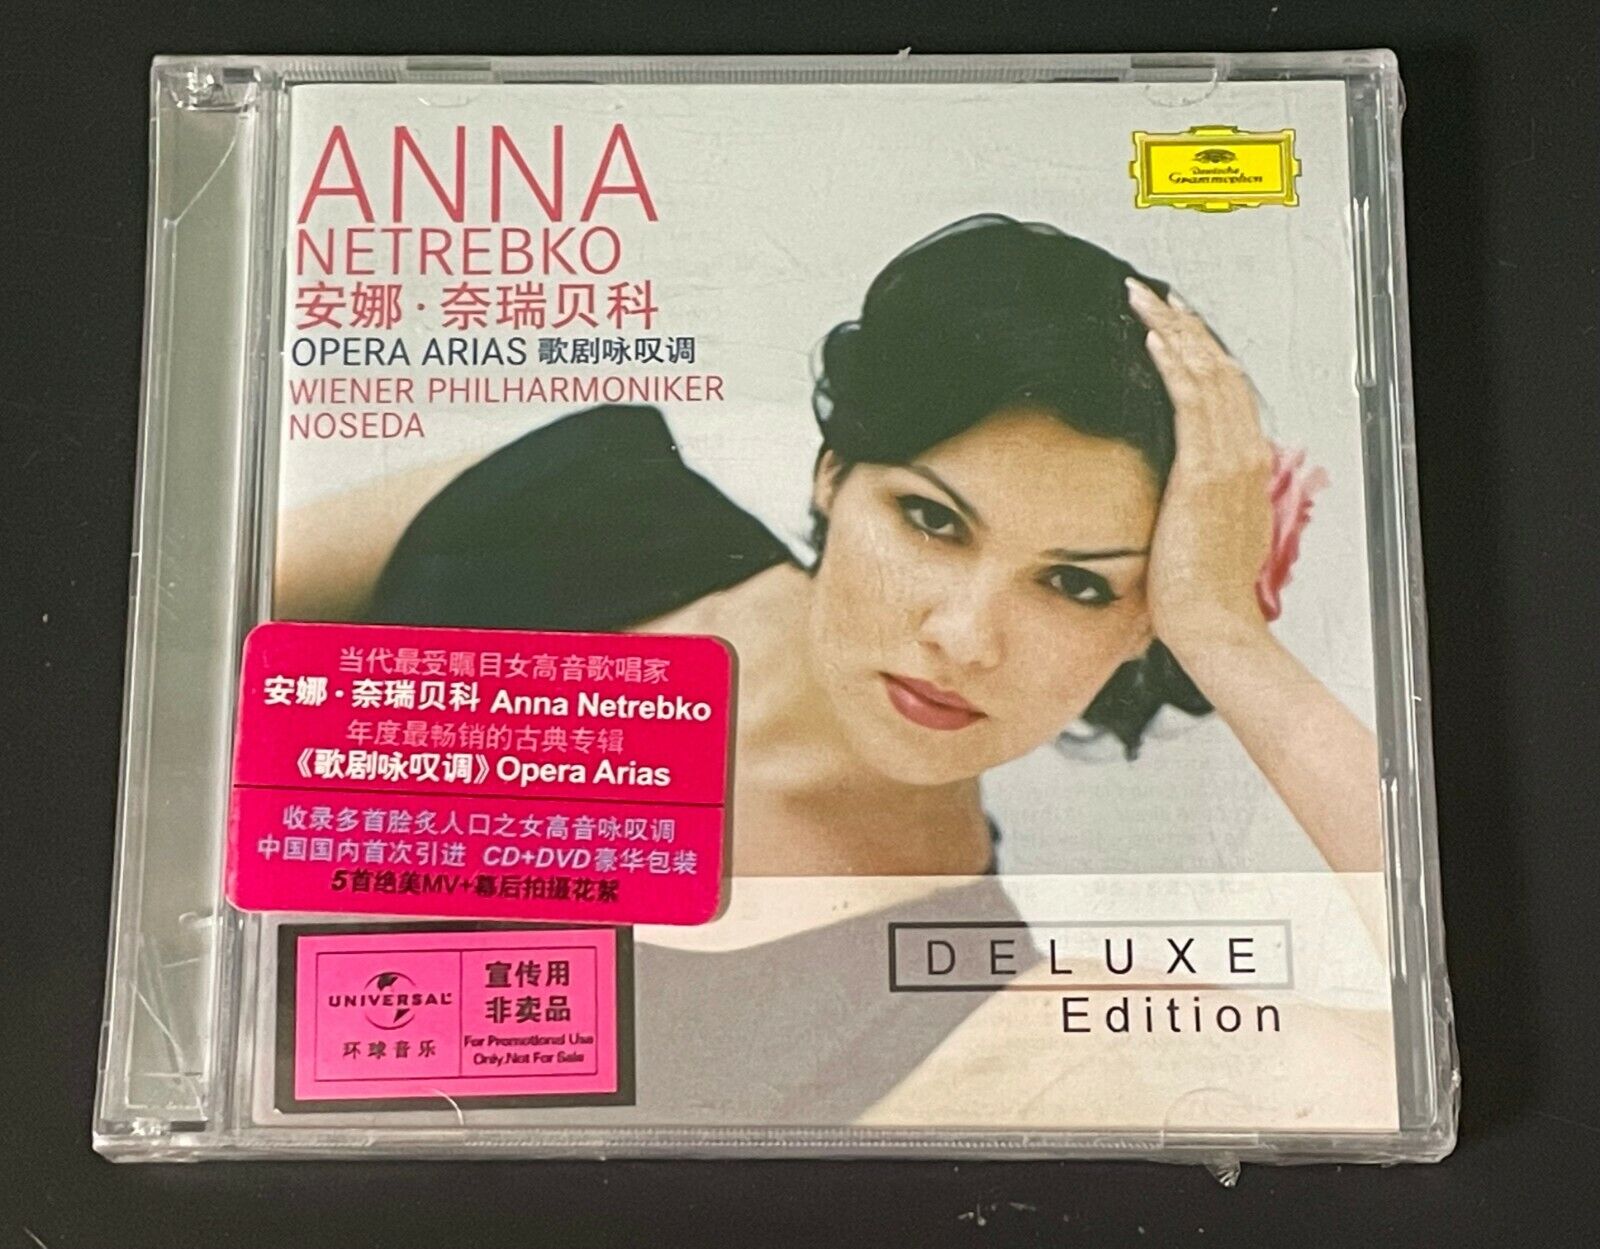 ANNA NETREBKO OPERA ARIAS China DELUXE Edition CD DVD Cover Promo Sticker Sealed